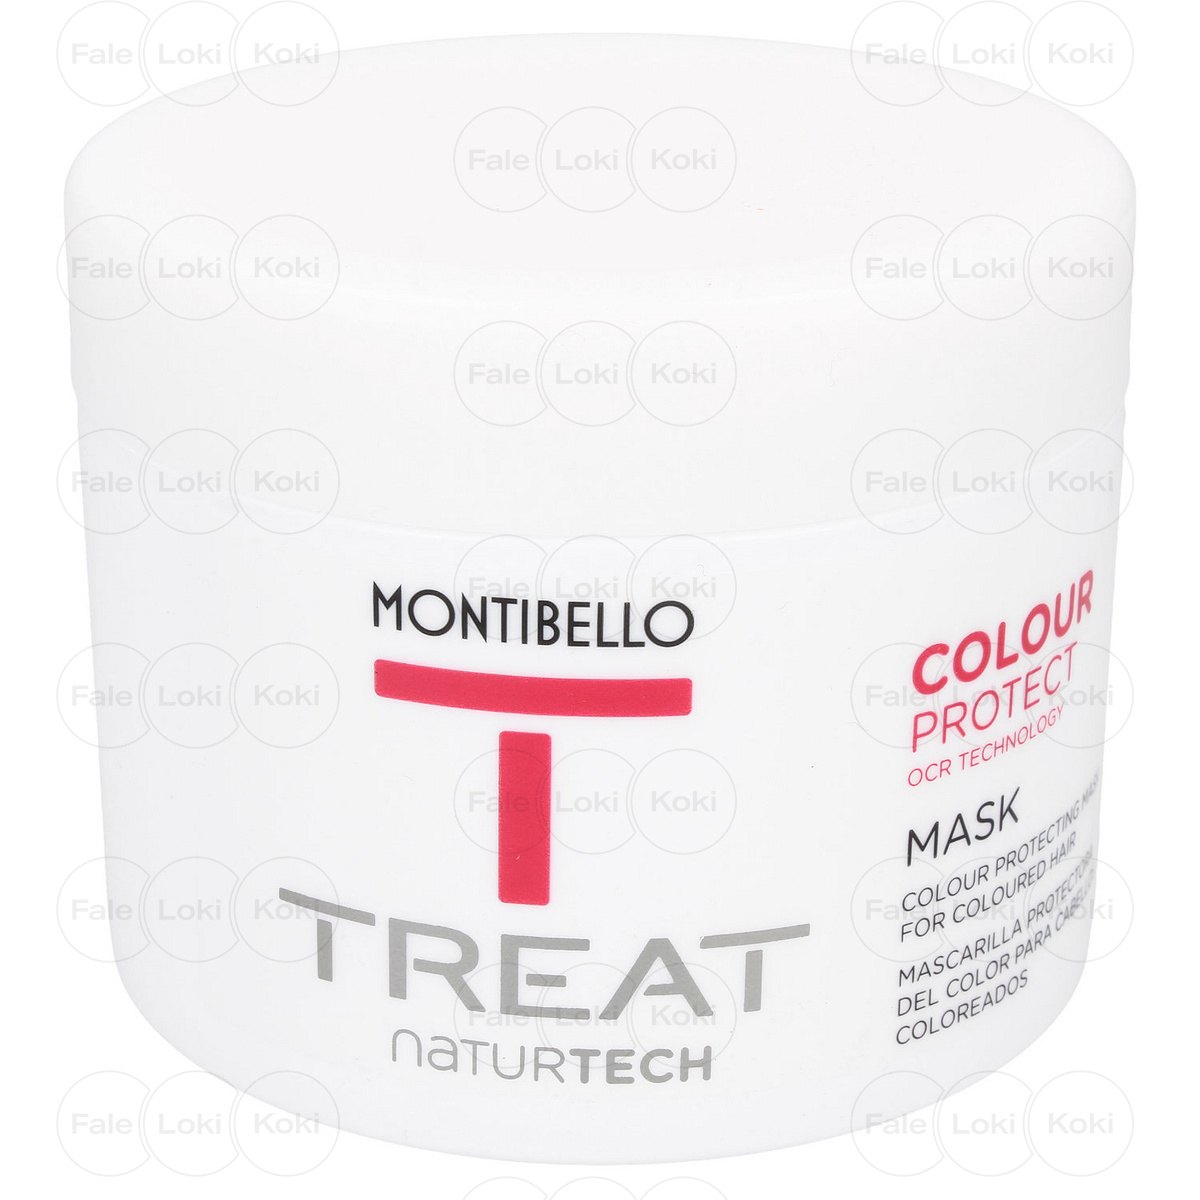 MONTIBELLO TREAT NATURTECH maska do włosów farbowanych Color Protect 500 ml